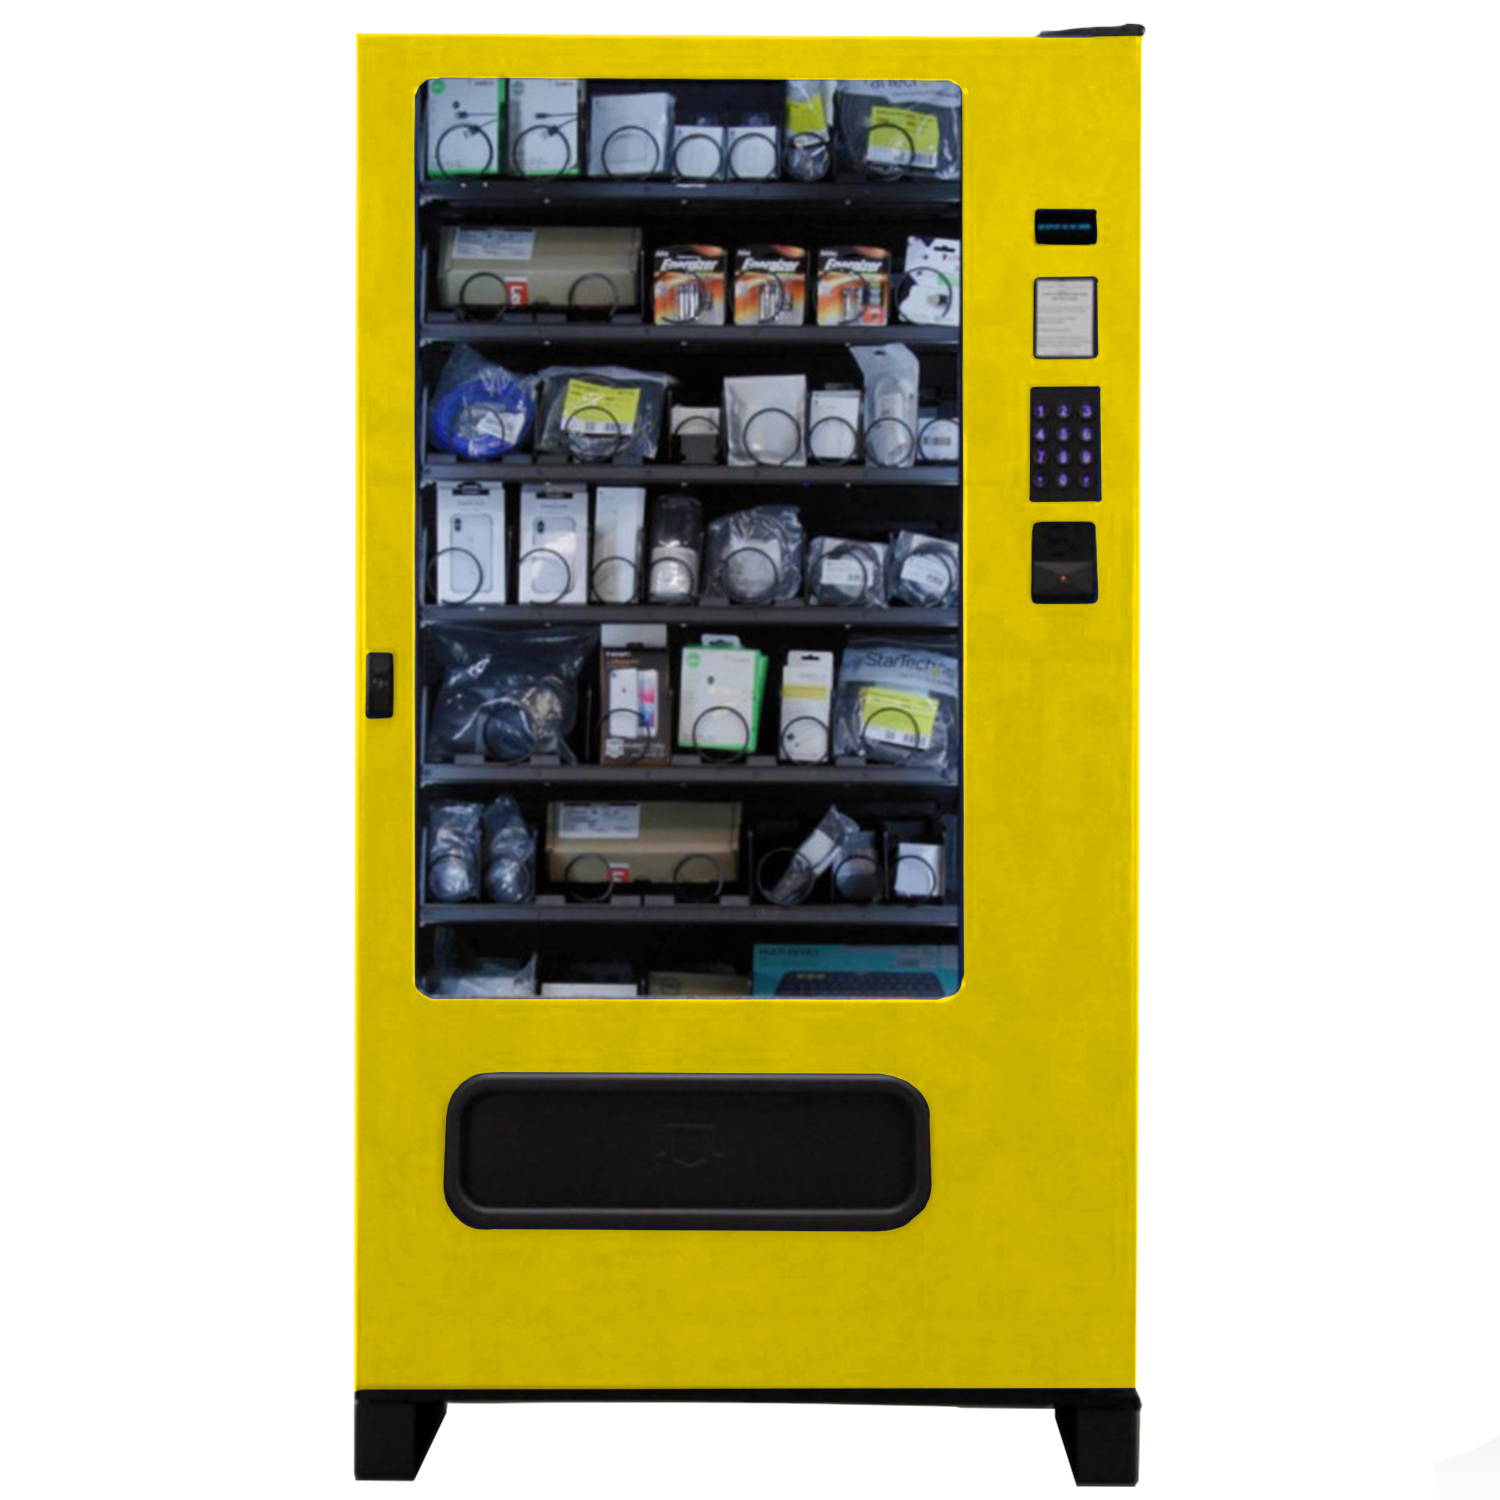 Office supply vending machine.